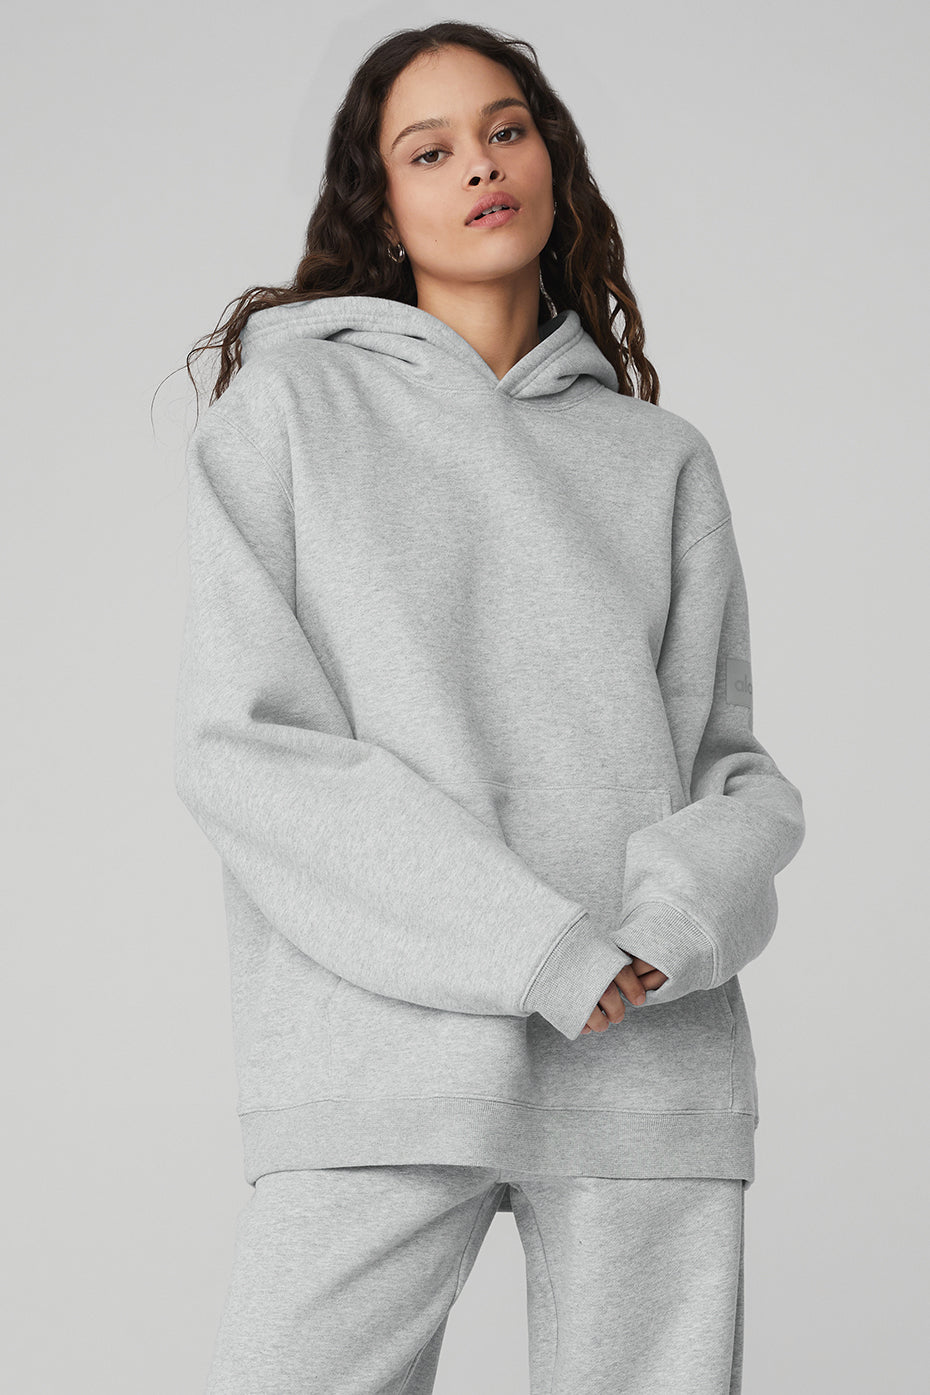 ALO Yoga Gray Cut Out Slay Slashed Long Sleeves Hoodie Sweatshirt - XS -  Athletic apparel